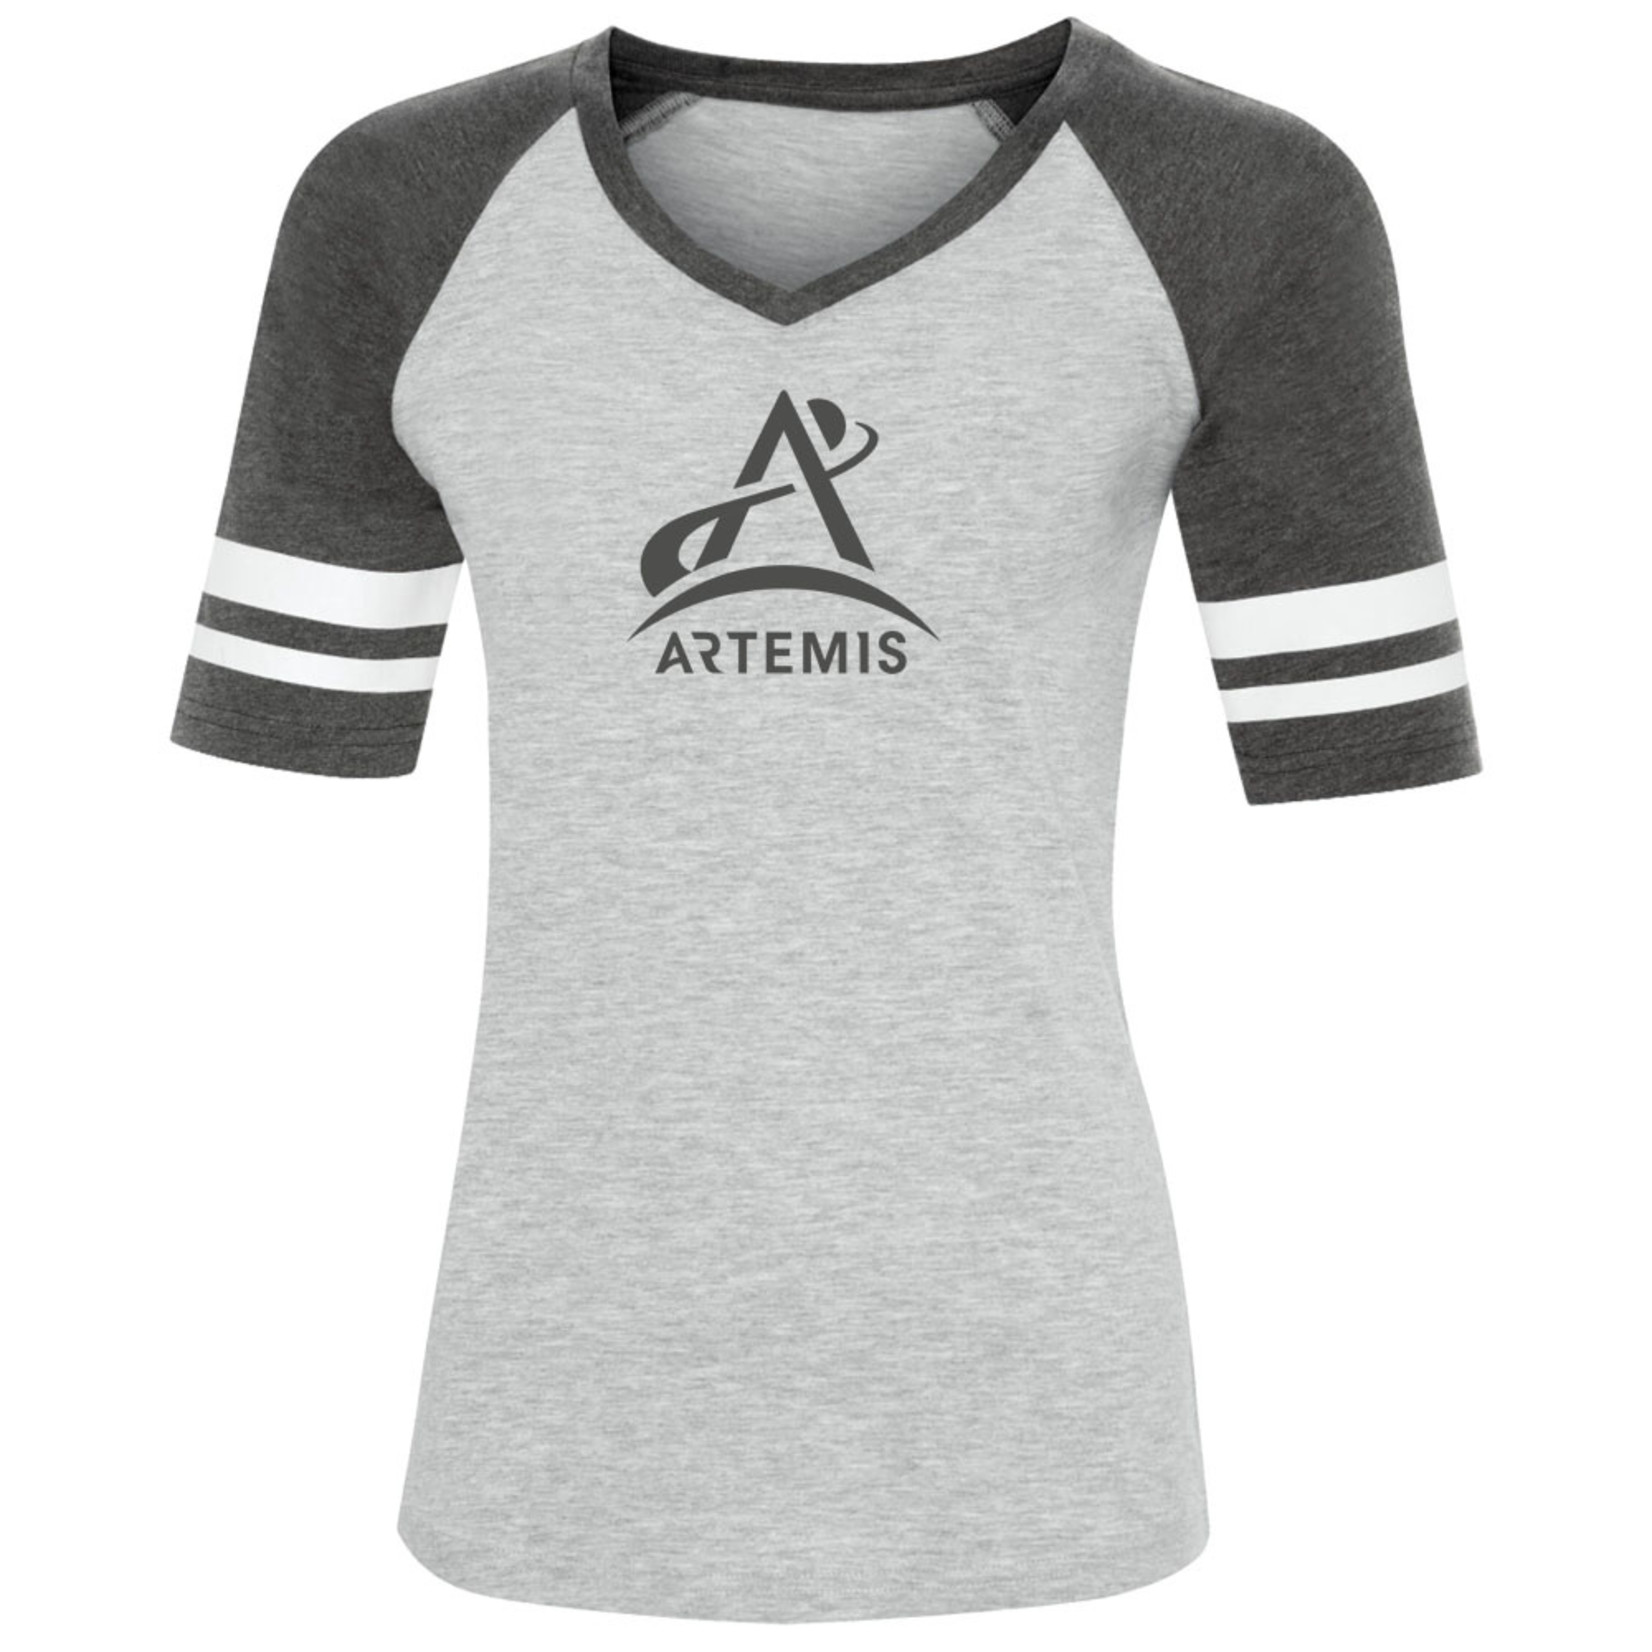 Aviation and Space T-Shirt Artemis pour femmes